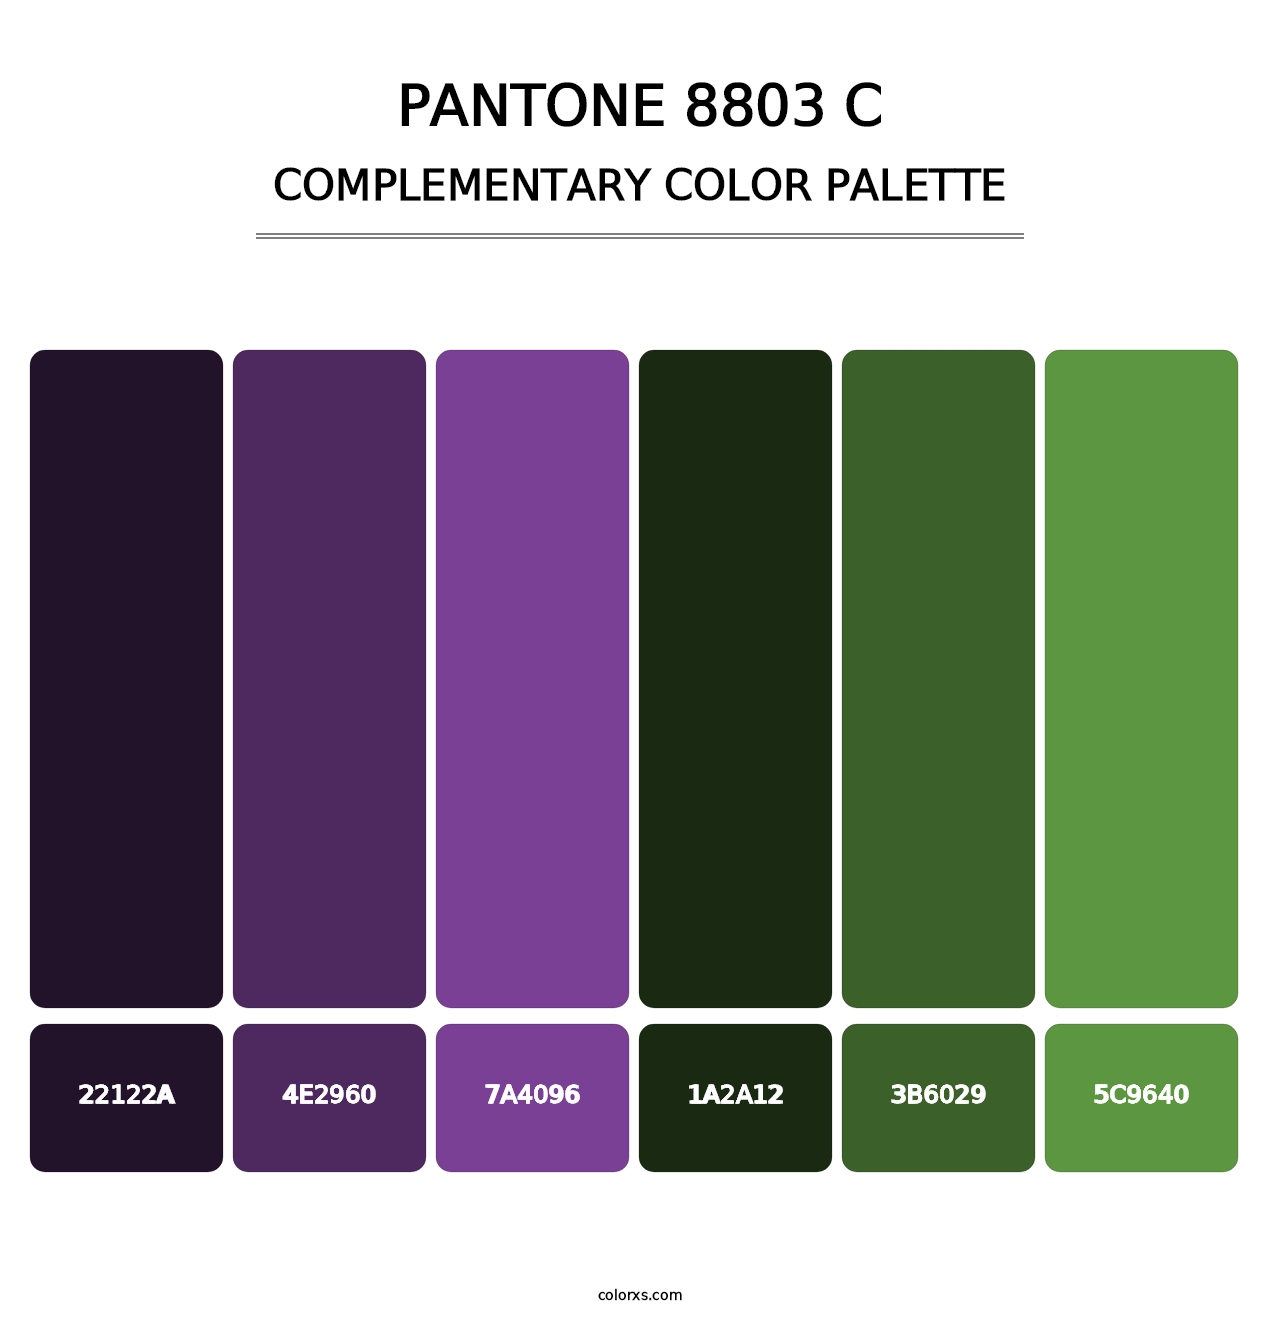 PANTONE 8803 C - Complementary Color Palette